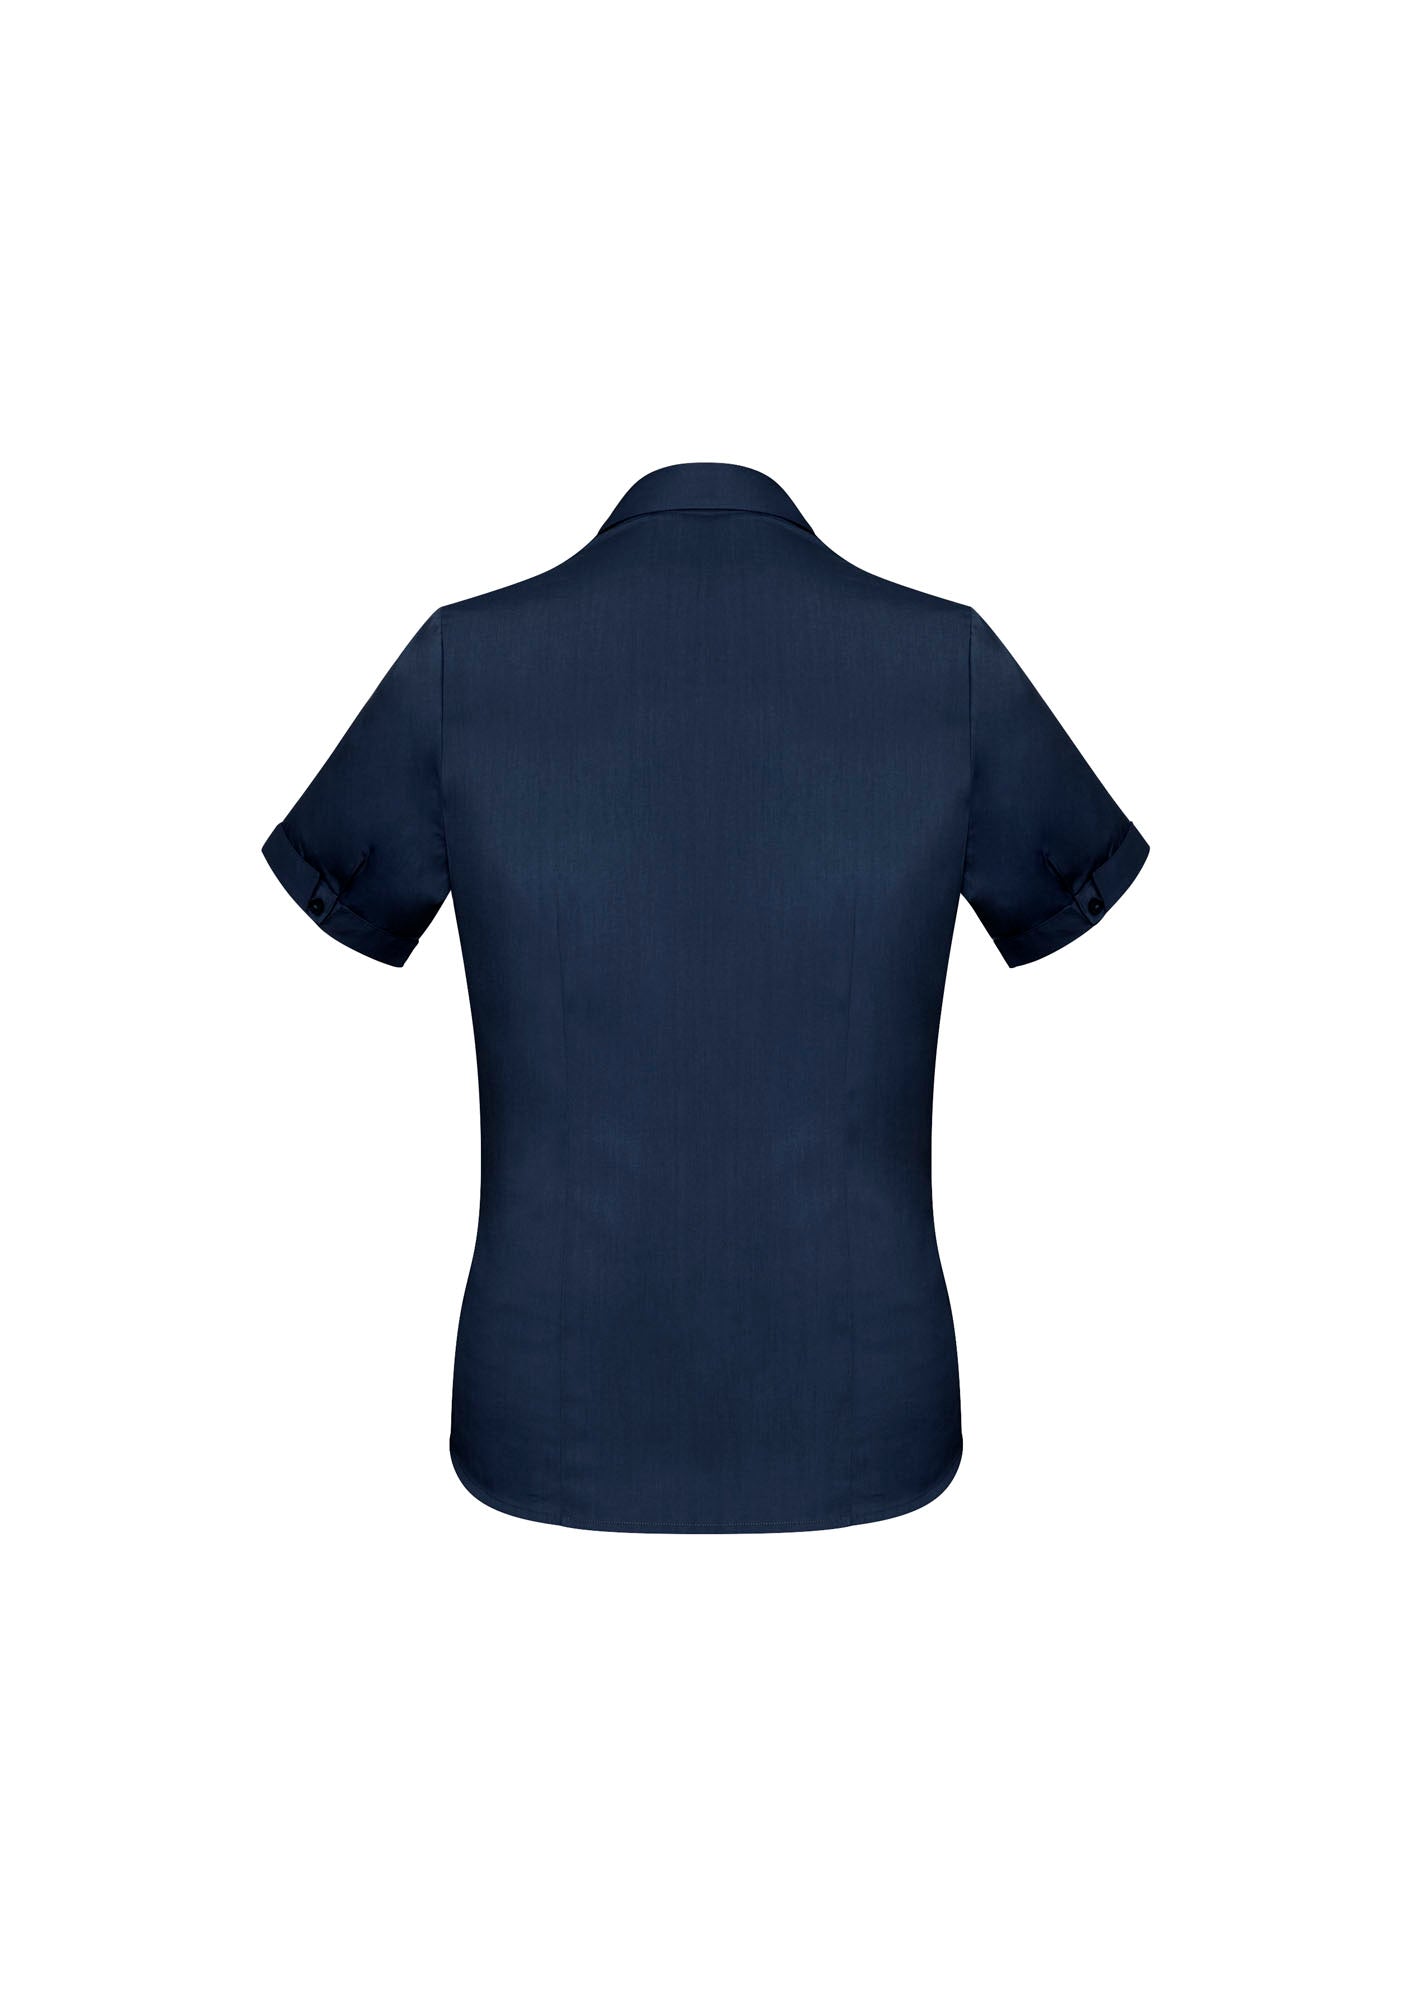 Biz care Ladies Monaco Short Sleeve Shirts   S770LS - Star Uniforms Australia